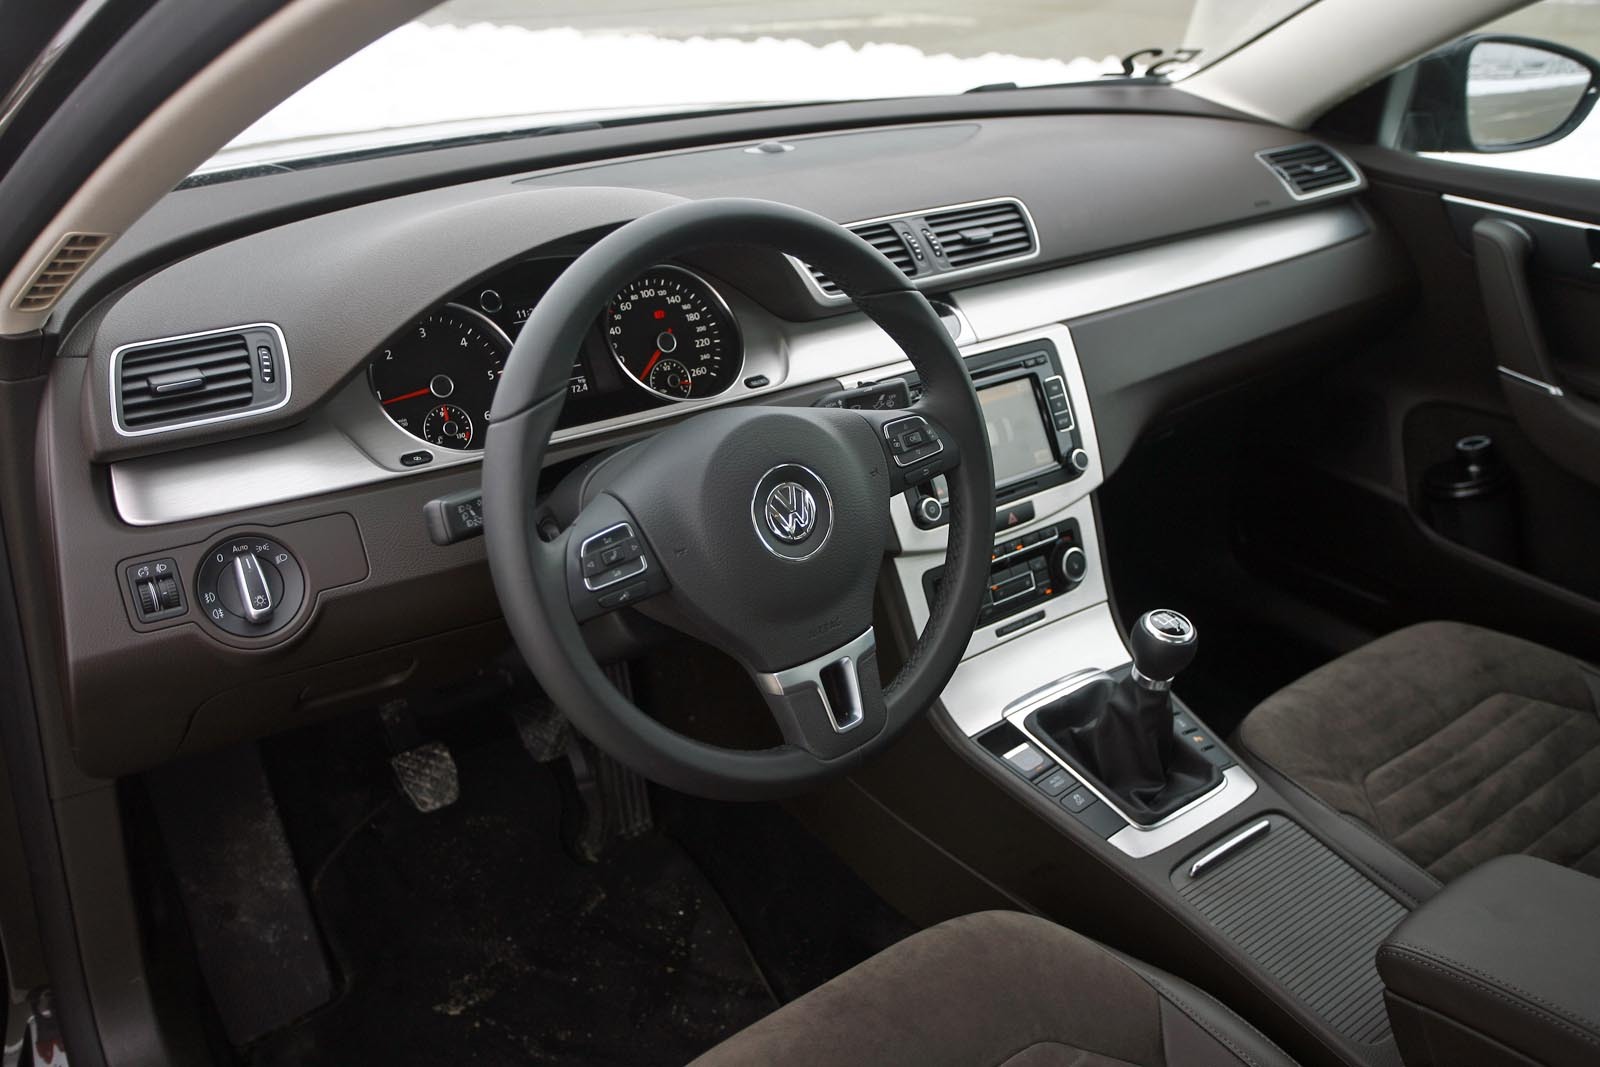 Volkswagen Passat e mai spatios ca Avensis, dar, la nivel calitativ, nu este peste Mazda6 si Avensis